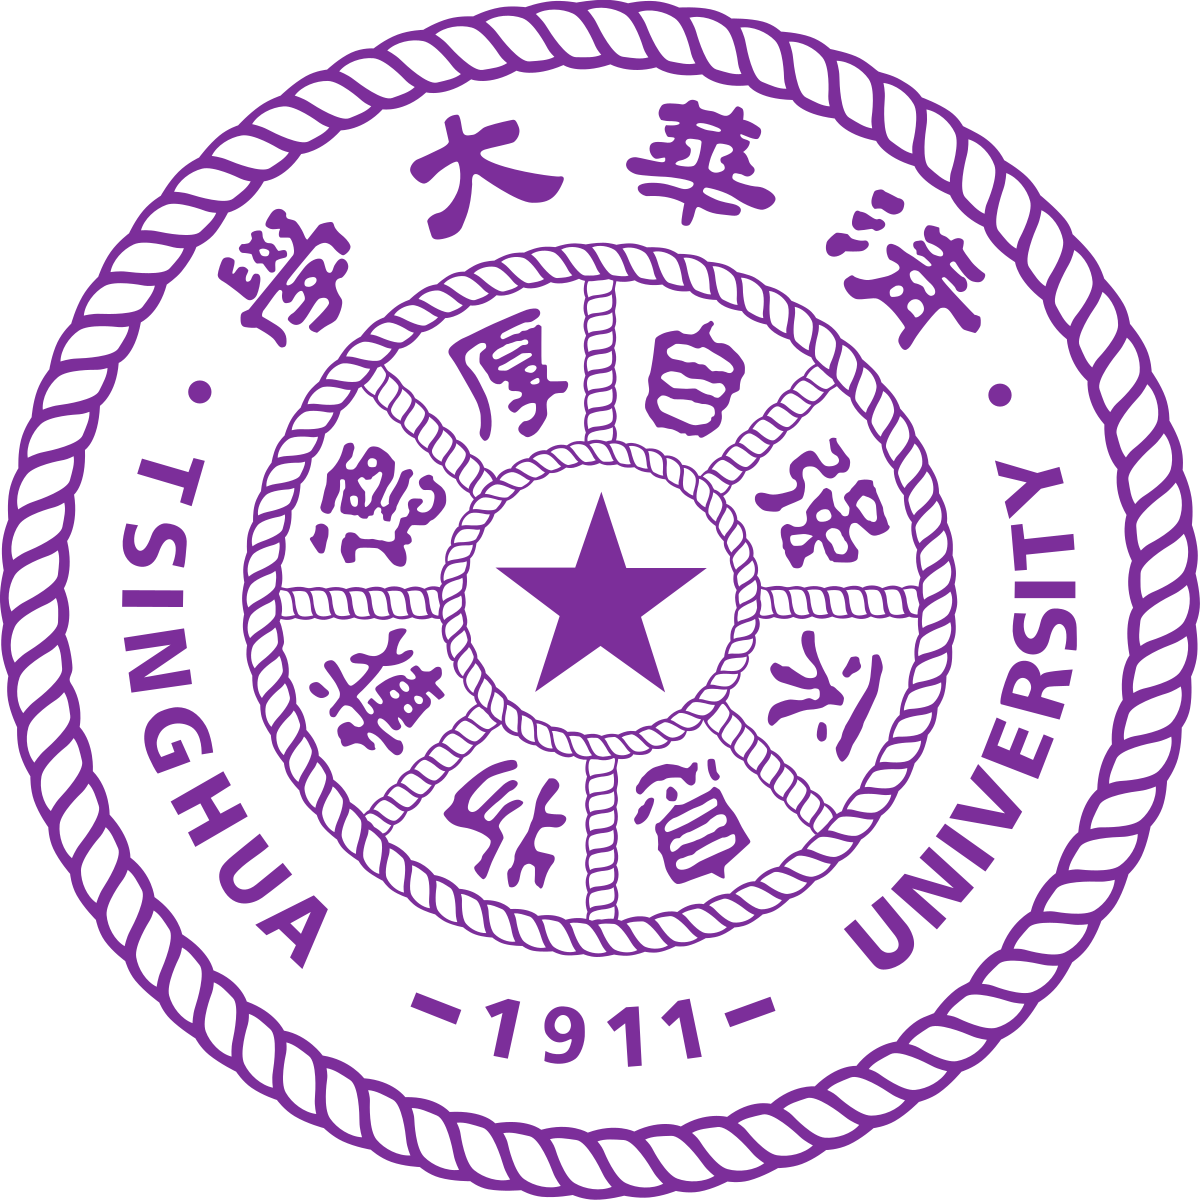 Tsinghua University emblem